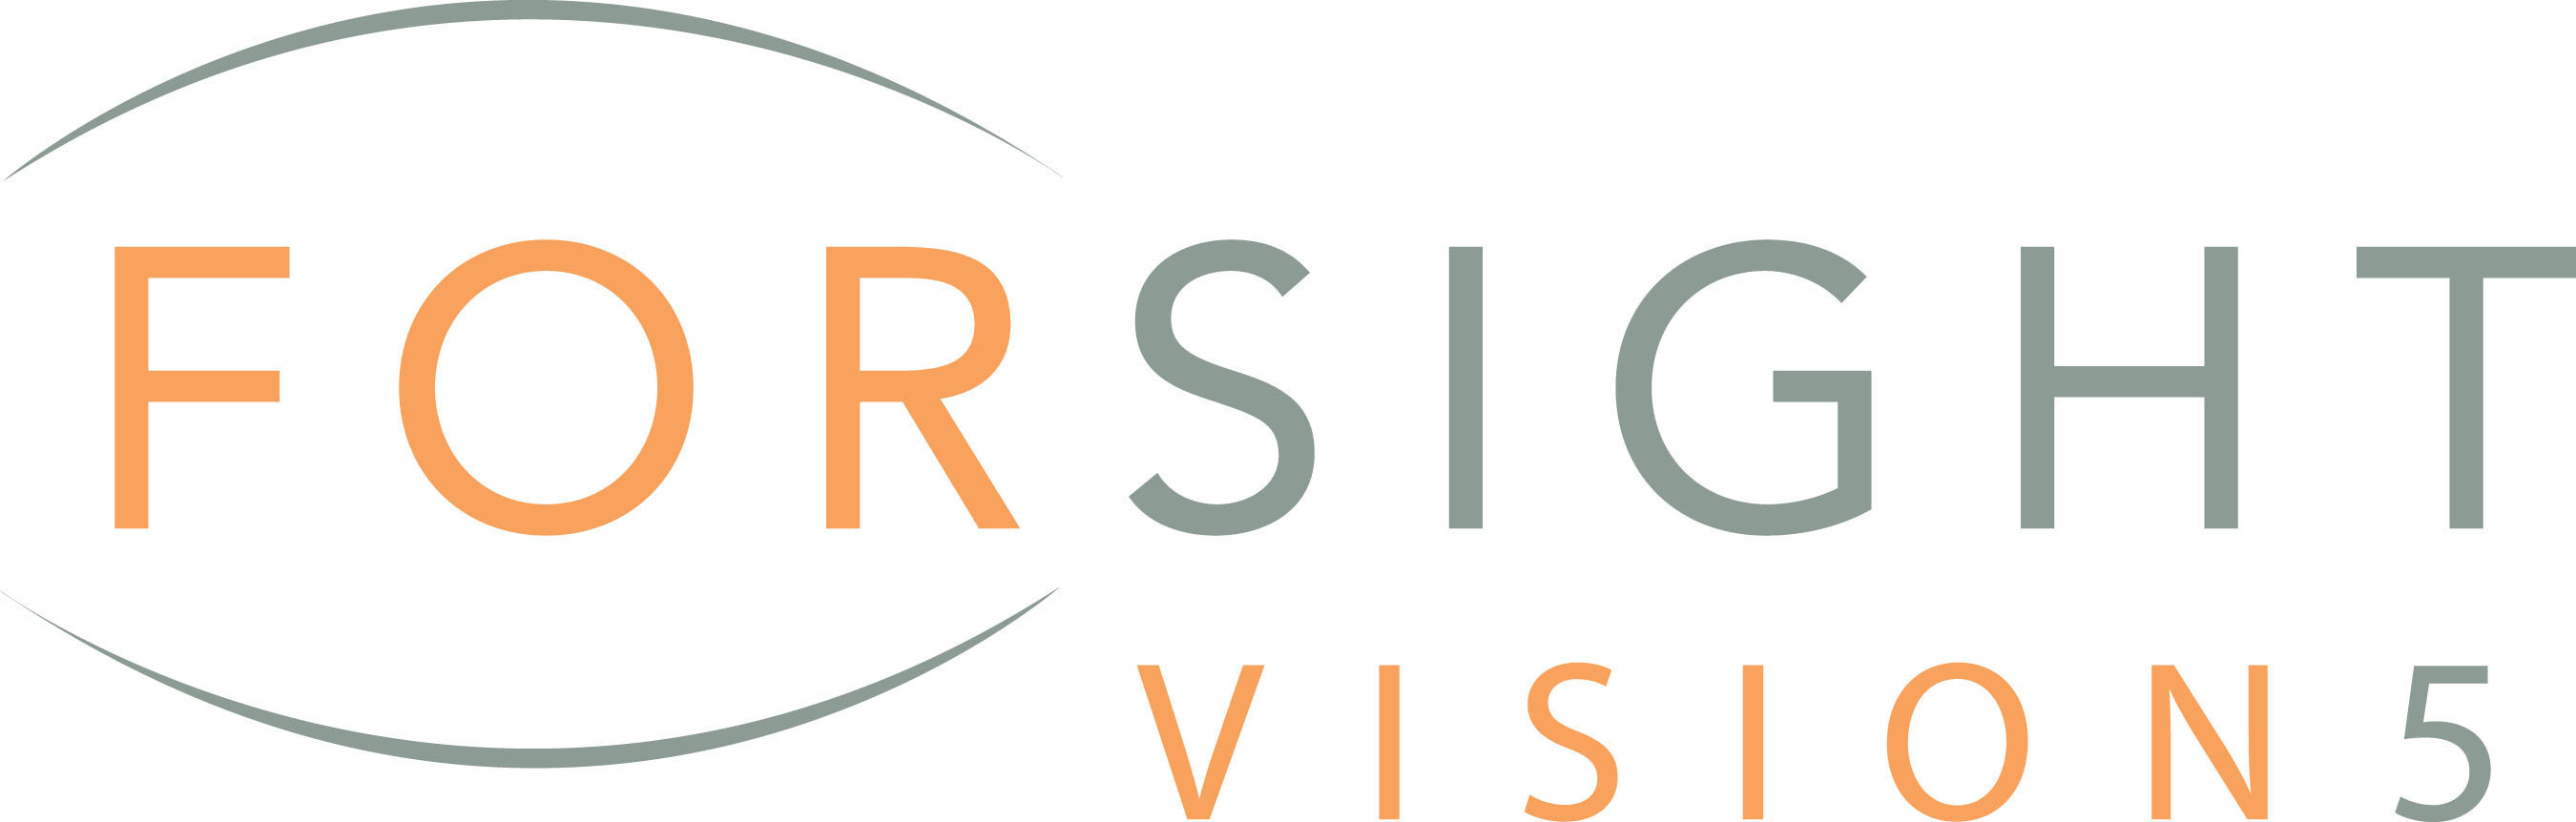 ForSight VISION5 logo (PRNewsFoto/ForSight VISION5) (PRNewsFoto/ForSight VISION5)